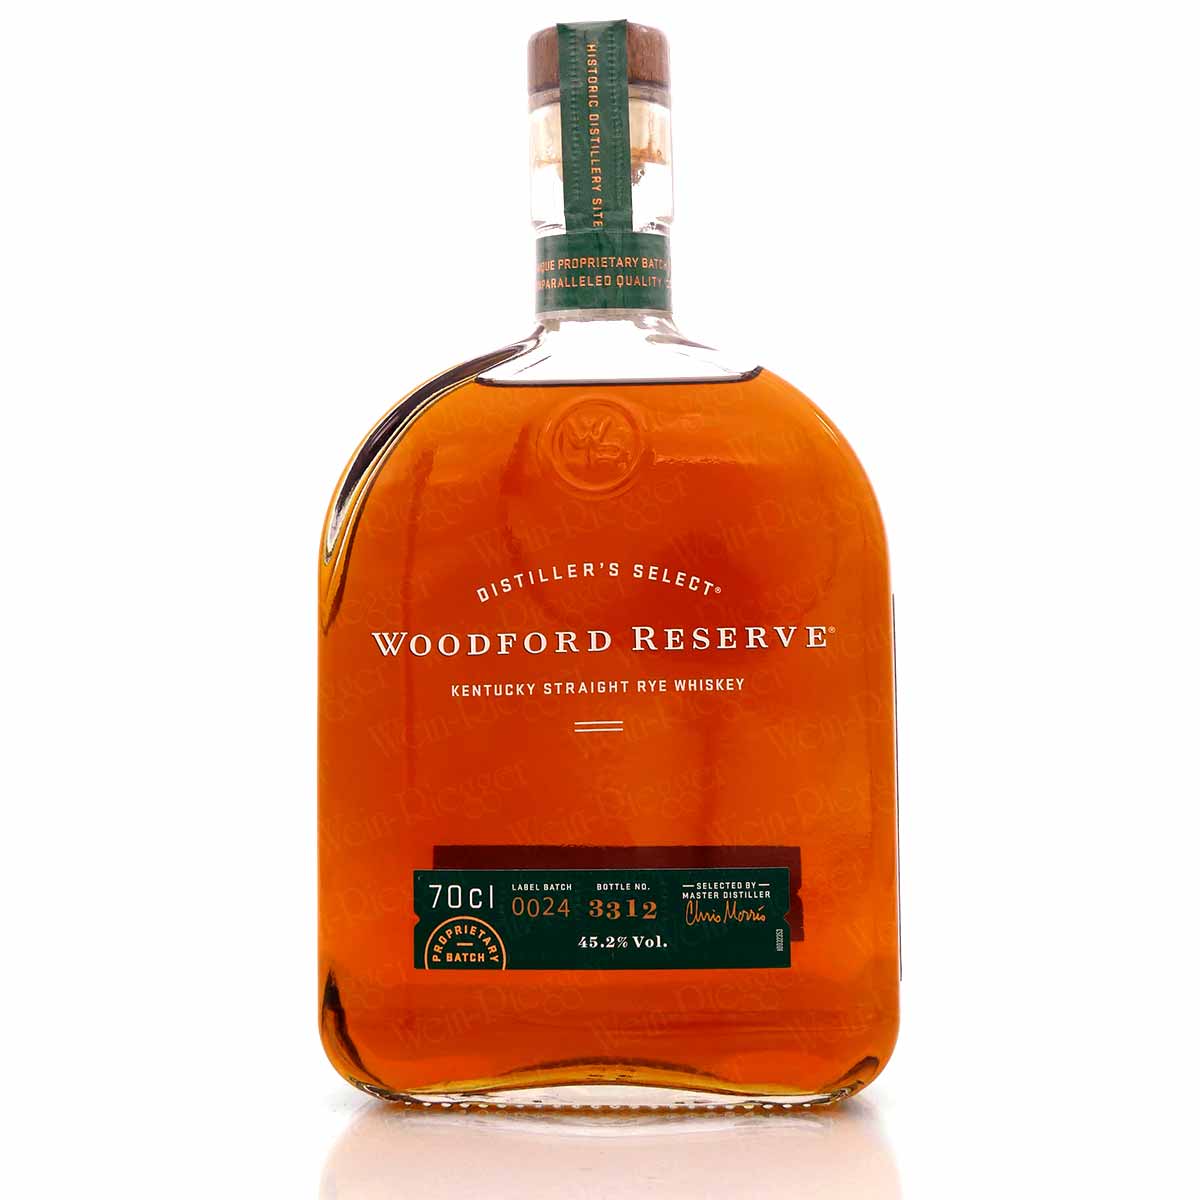 Woodford Reserve Kentucky Straight RYE Whiskey